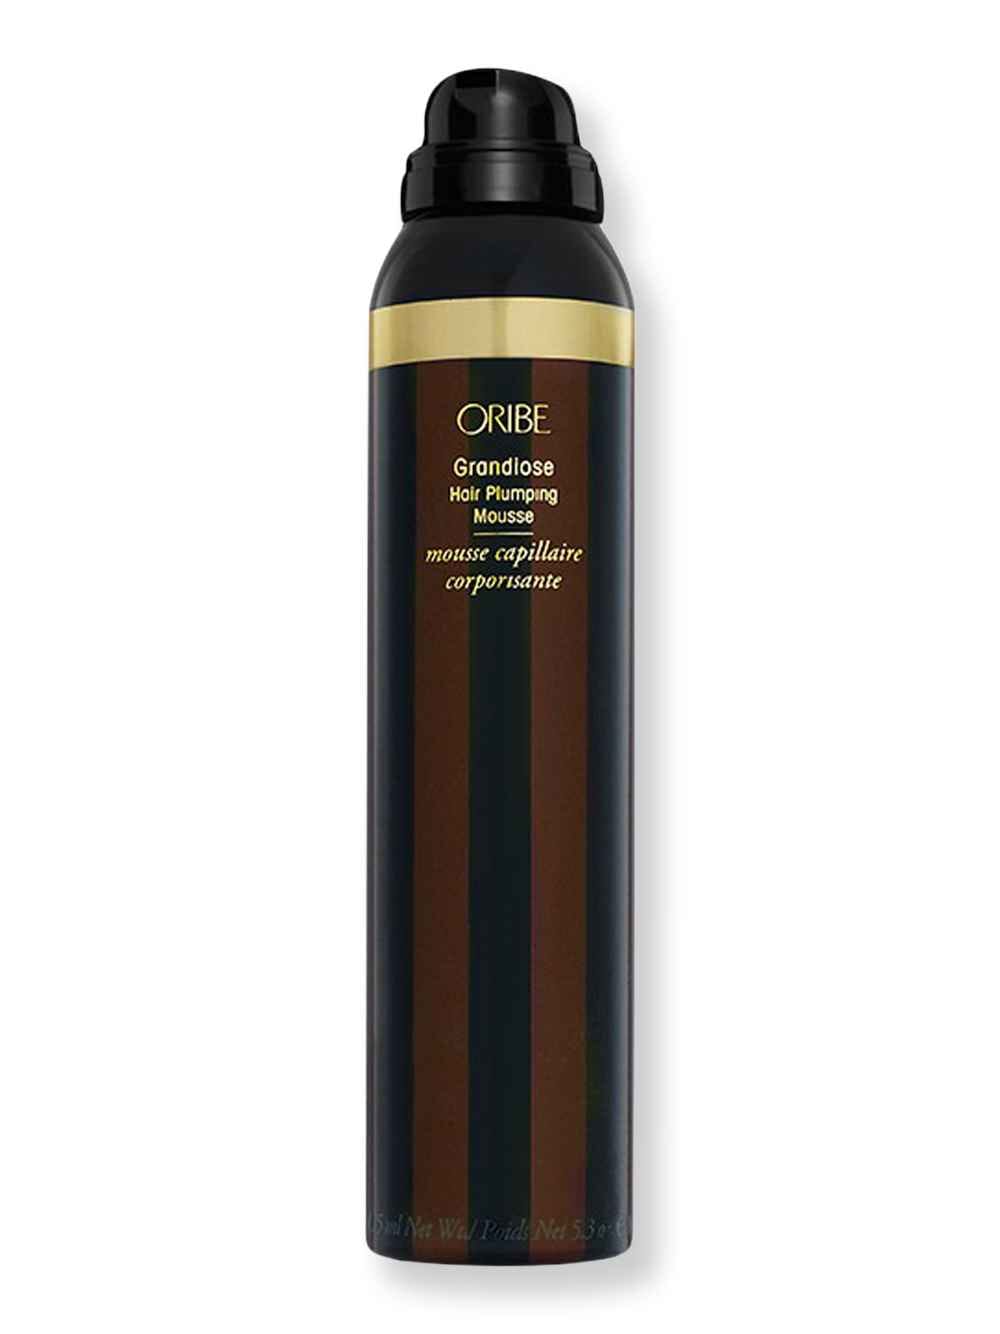 Oribe Oribe Grandiose Hair Plumping Mousse 5.7 oz175 ml Mousses & Foams 